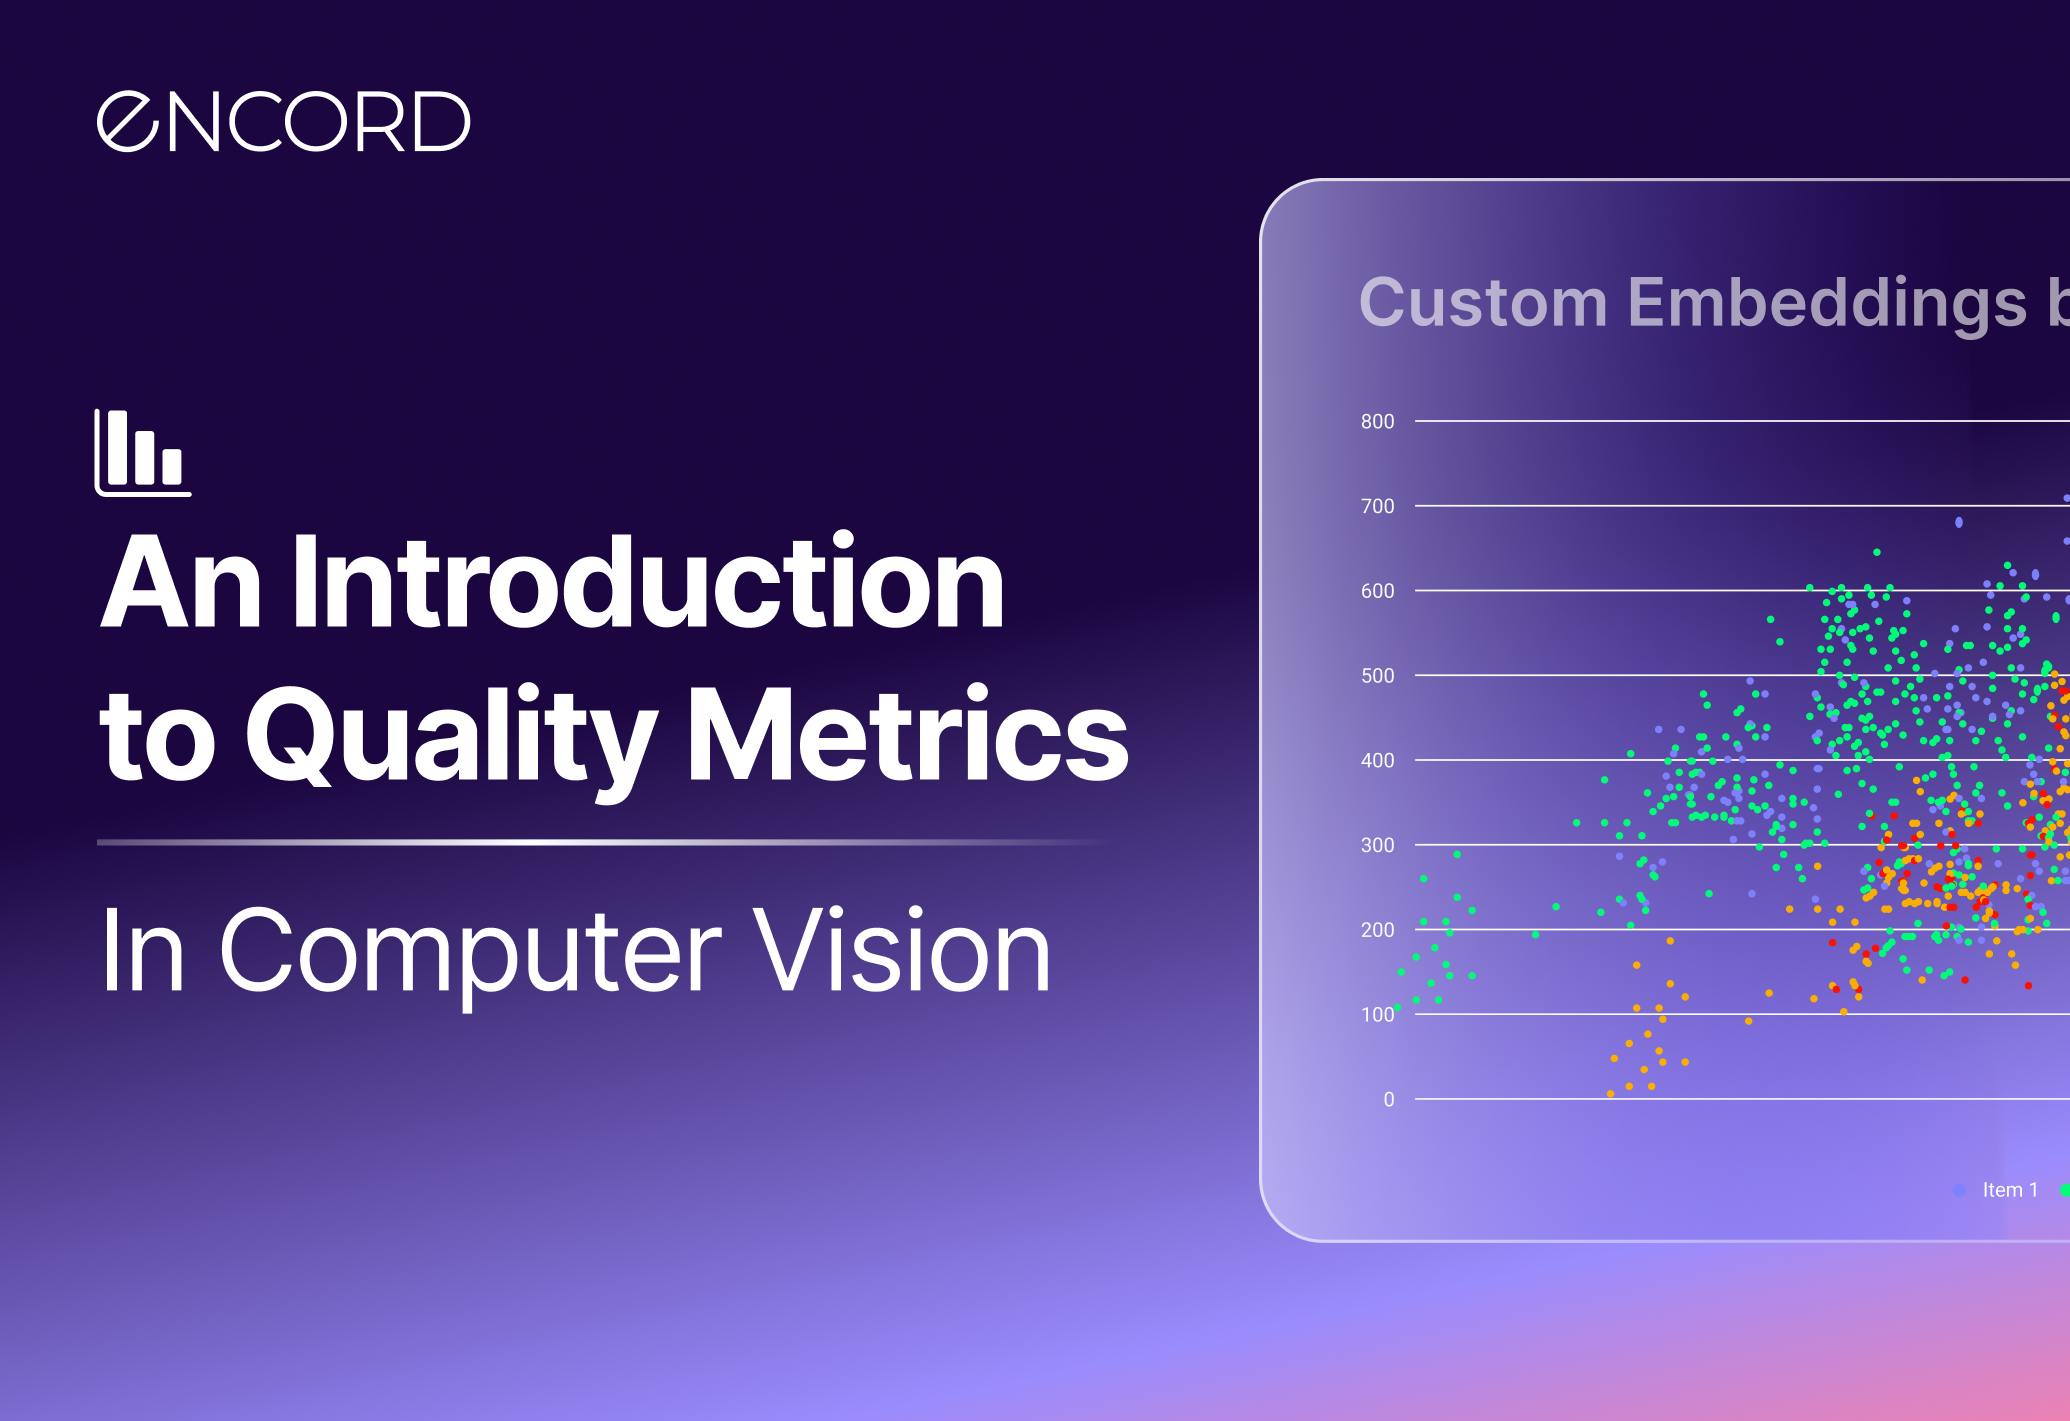 sampleImage_data-quality-metrics